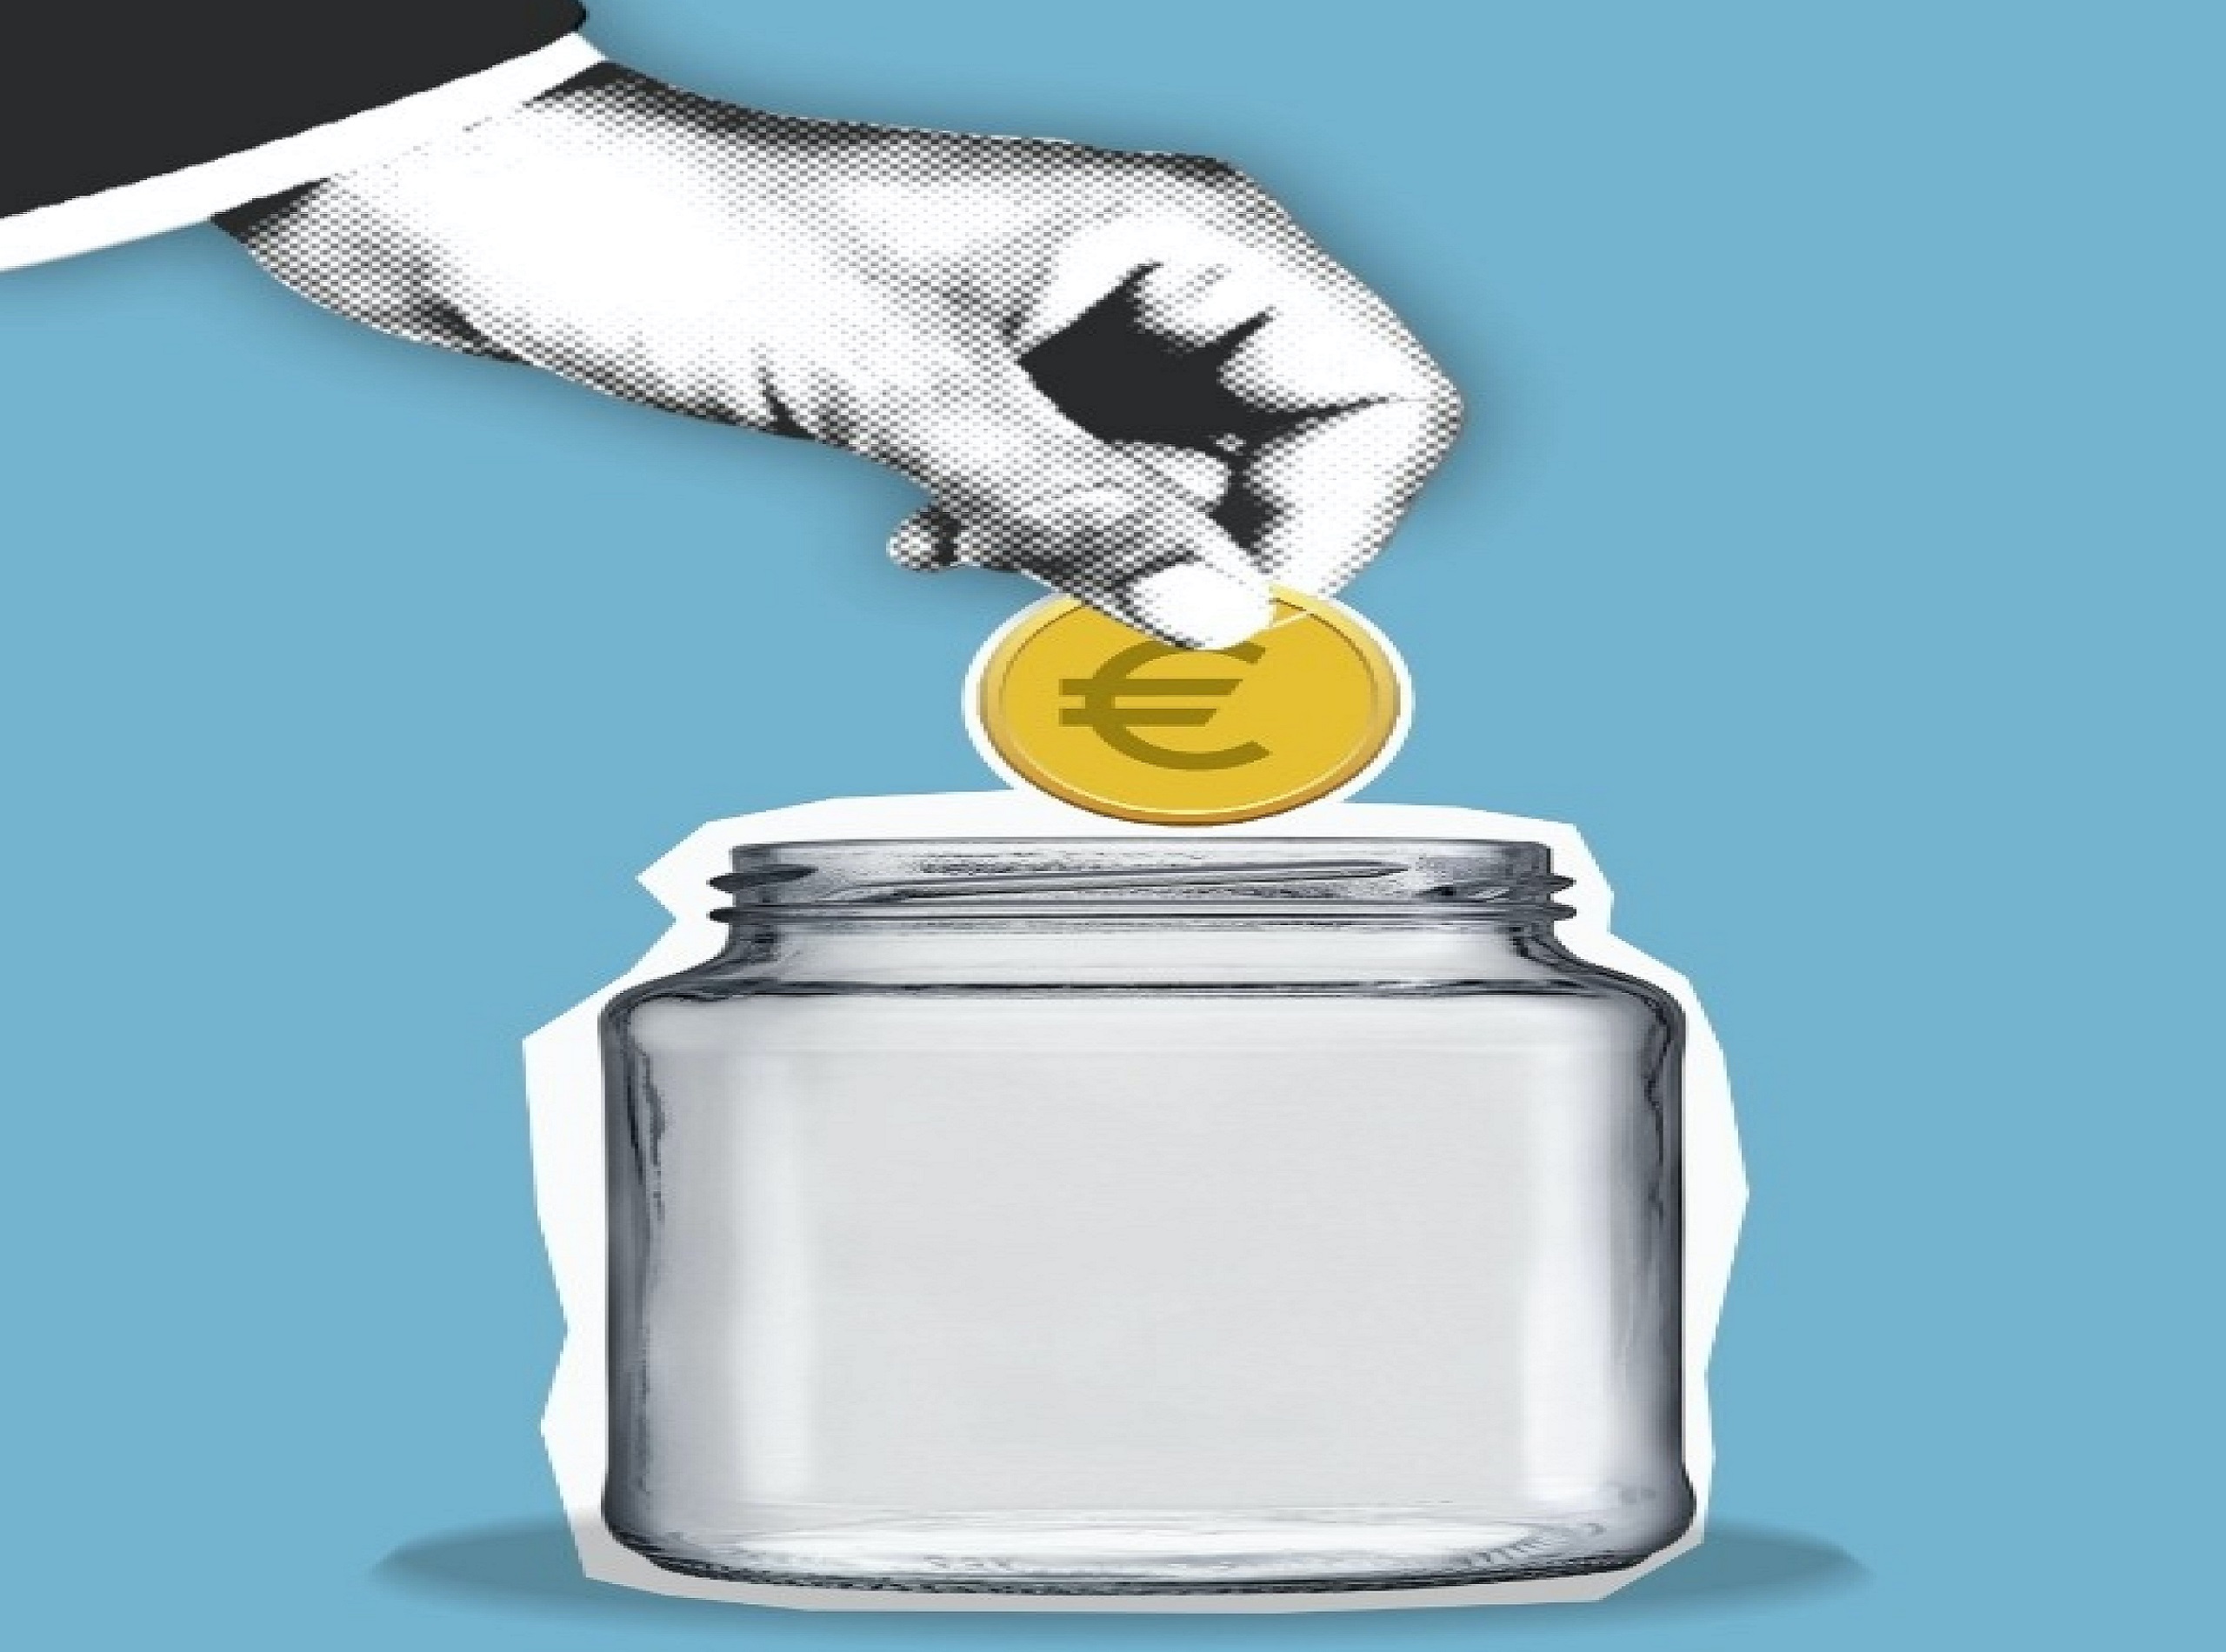 A hand placing a coin into a jar